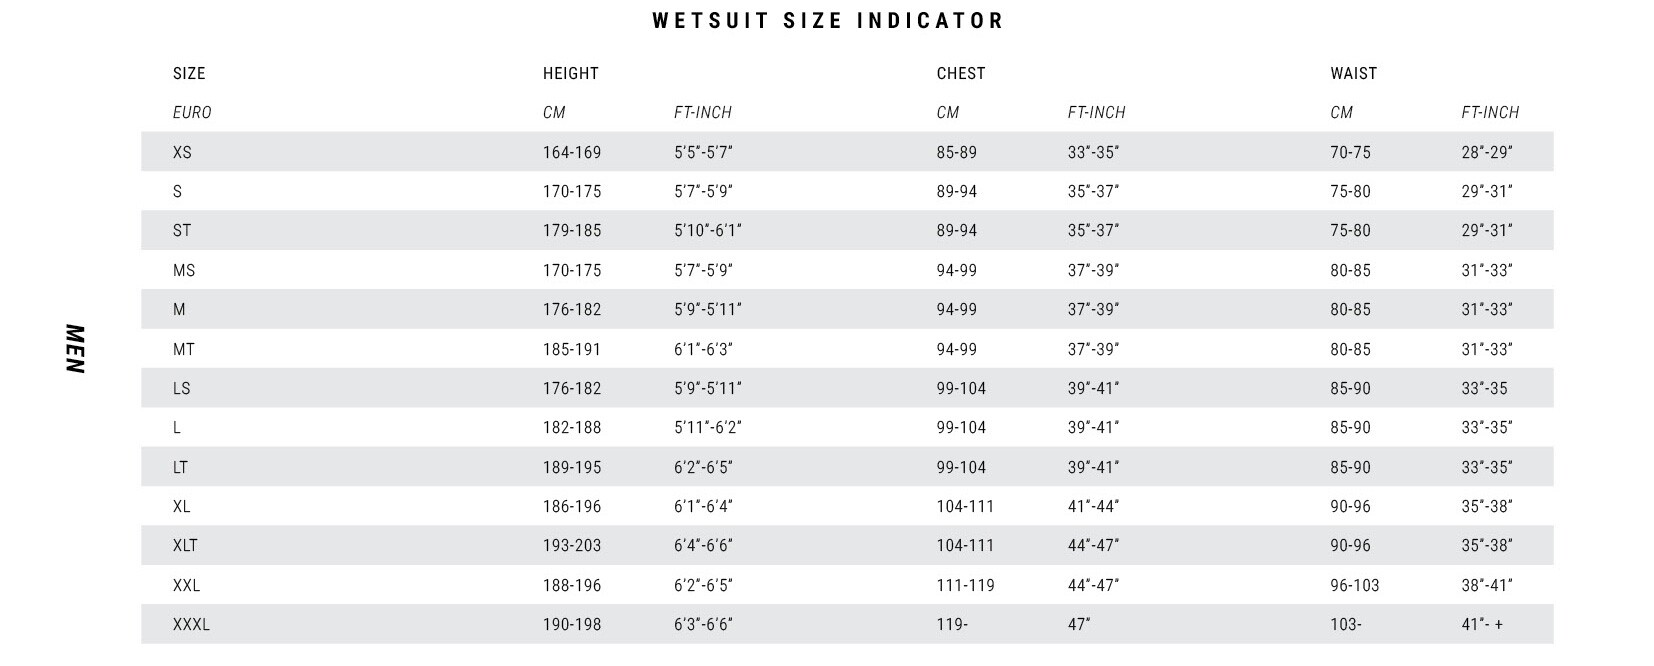 Mystic Brand 3/2 back-zip shorty wetsuit global blue